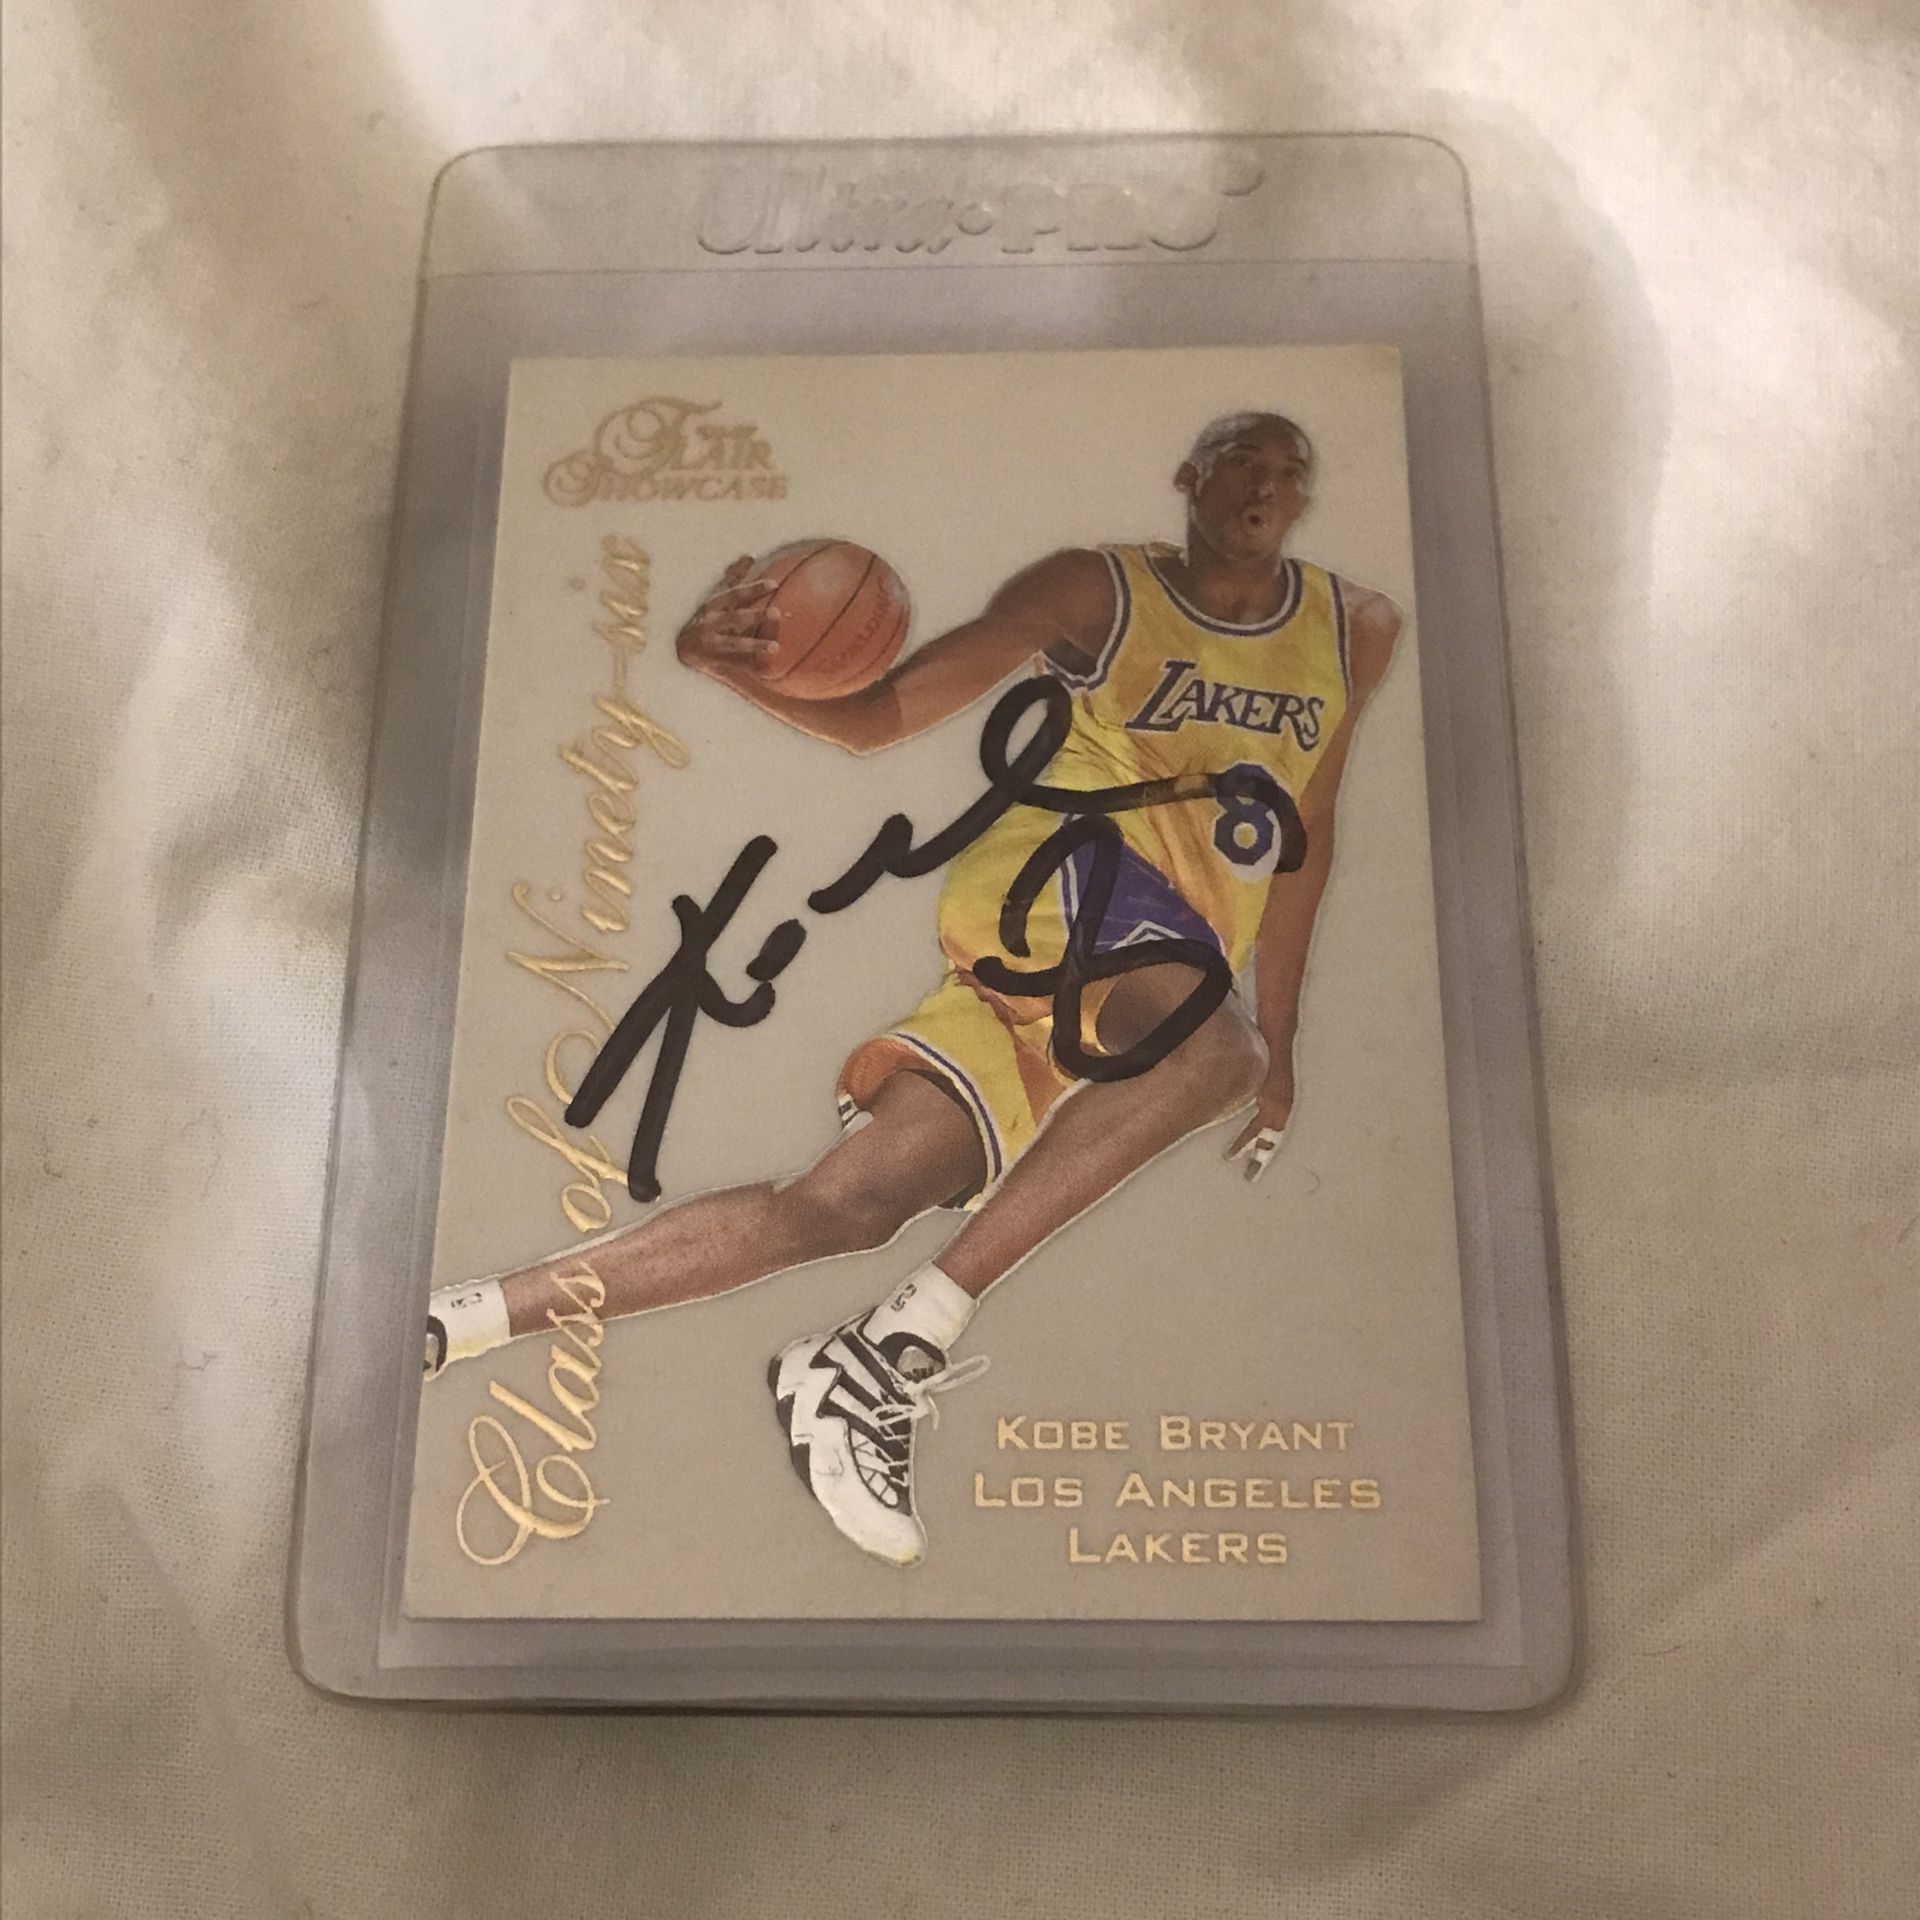 Kobe Bryant Autographed Rookie Card